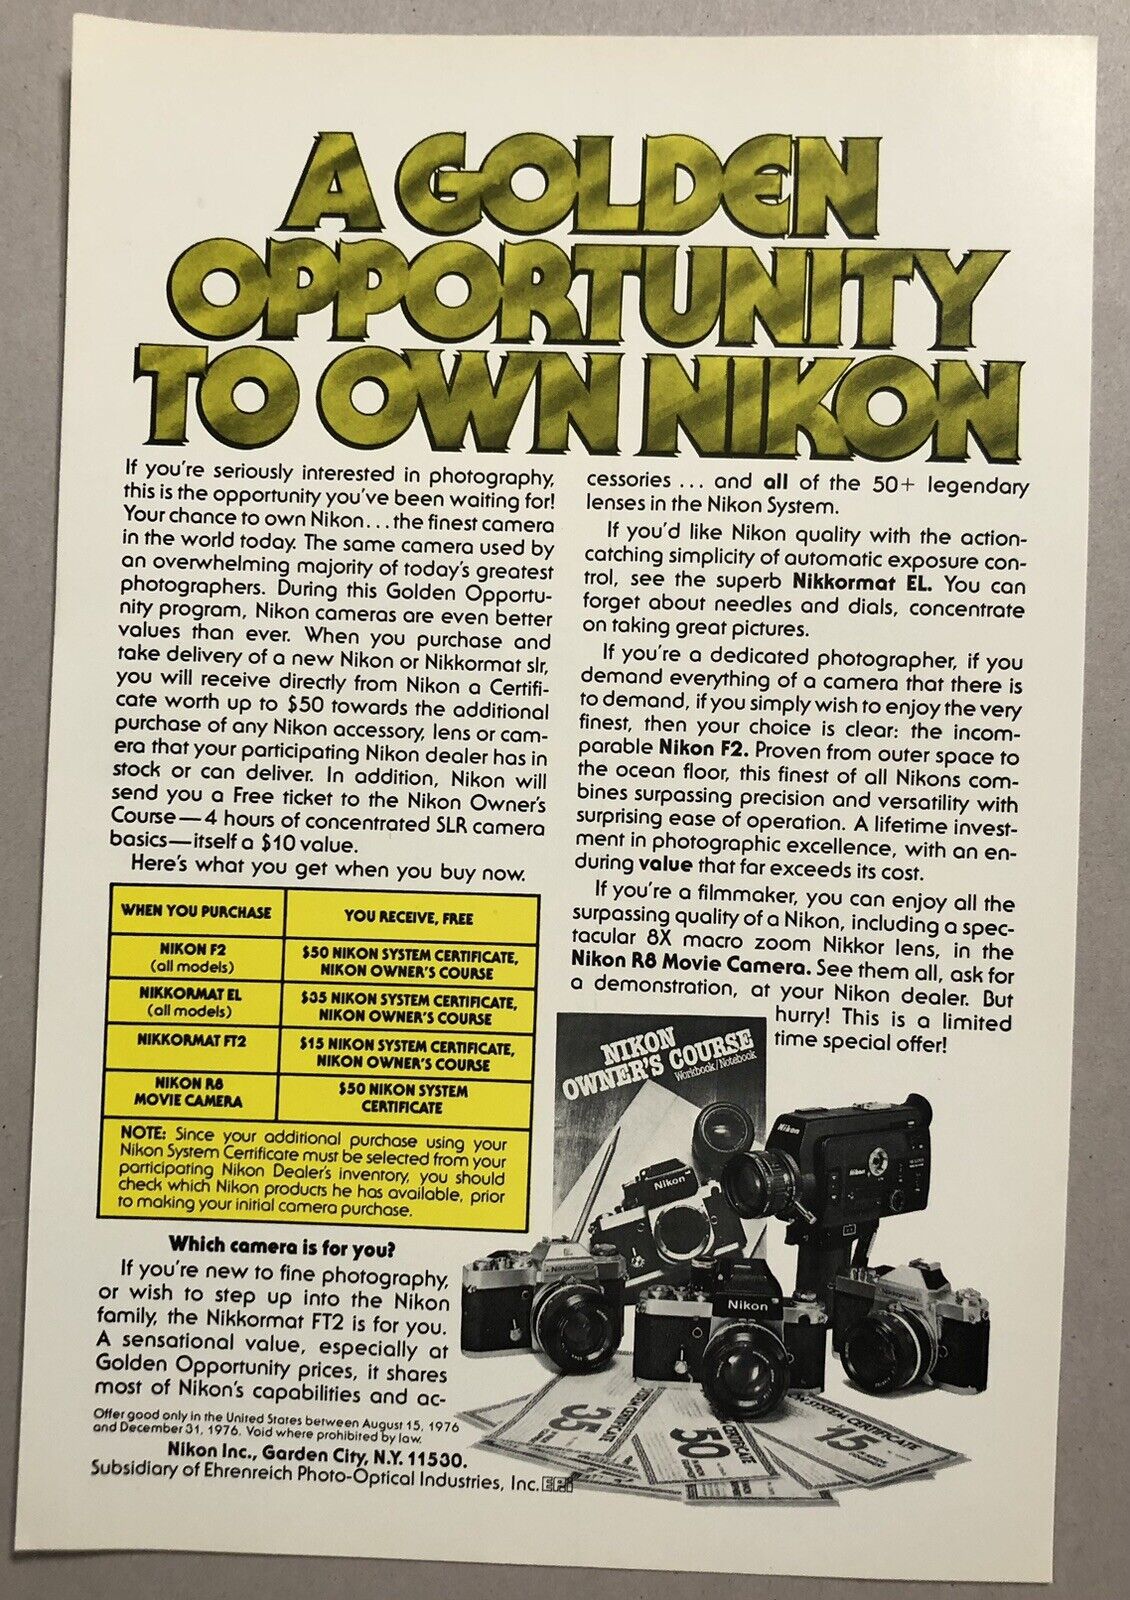 Vintage 1977 Original Print Advertisement Full Page - Nikon Golden Opportunity